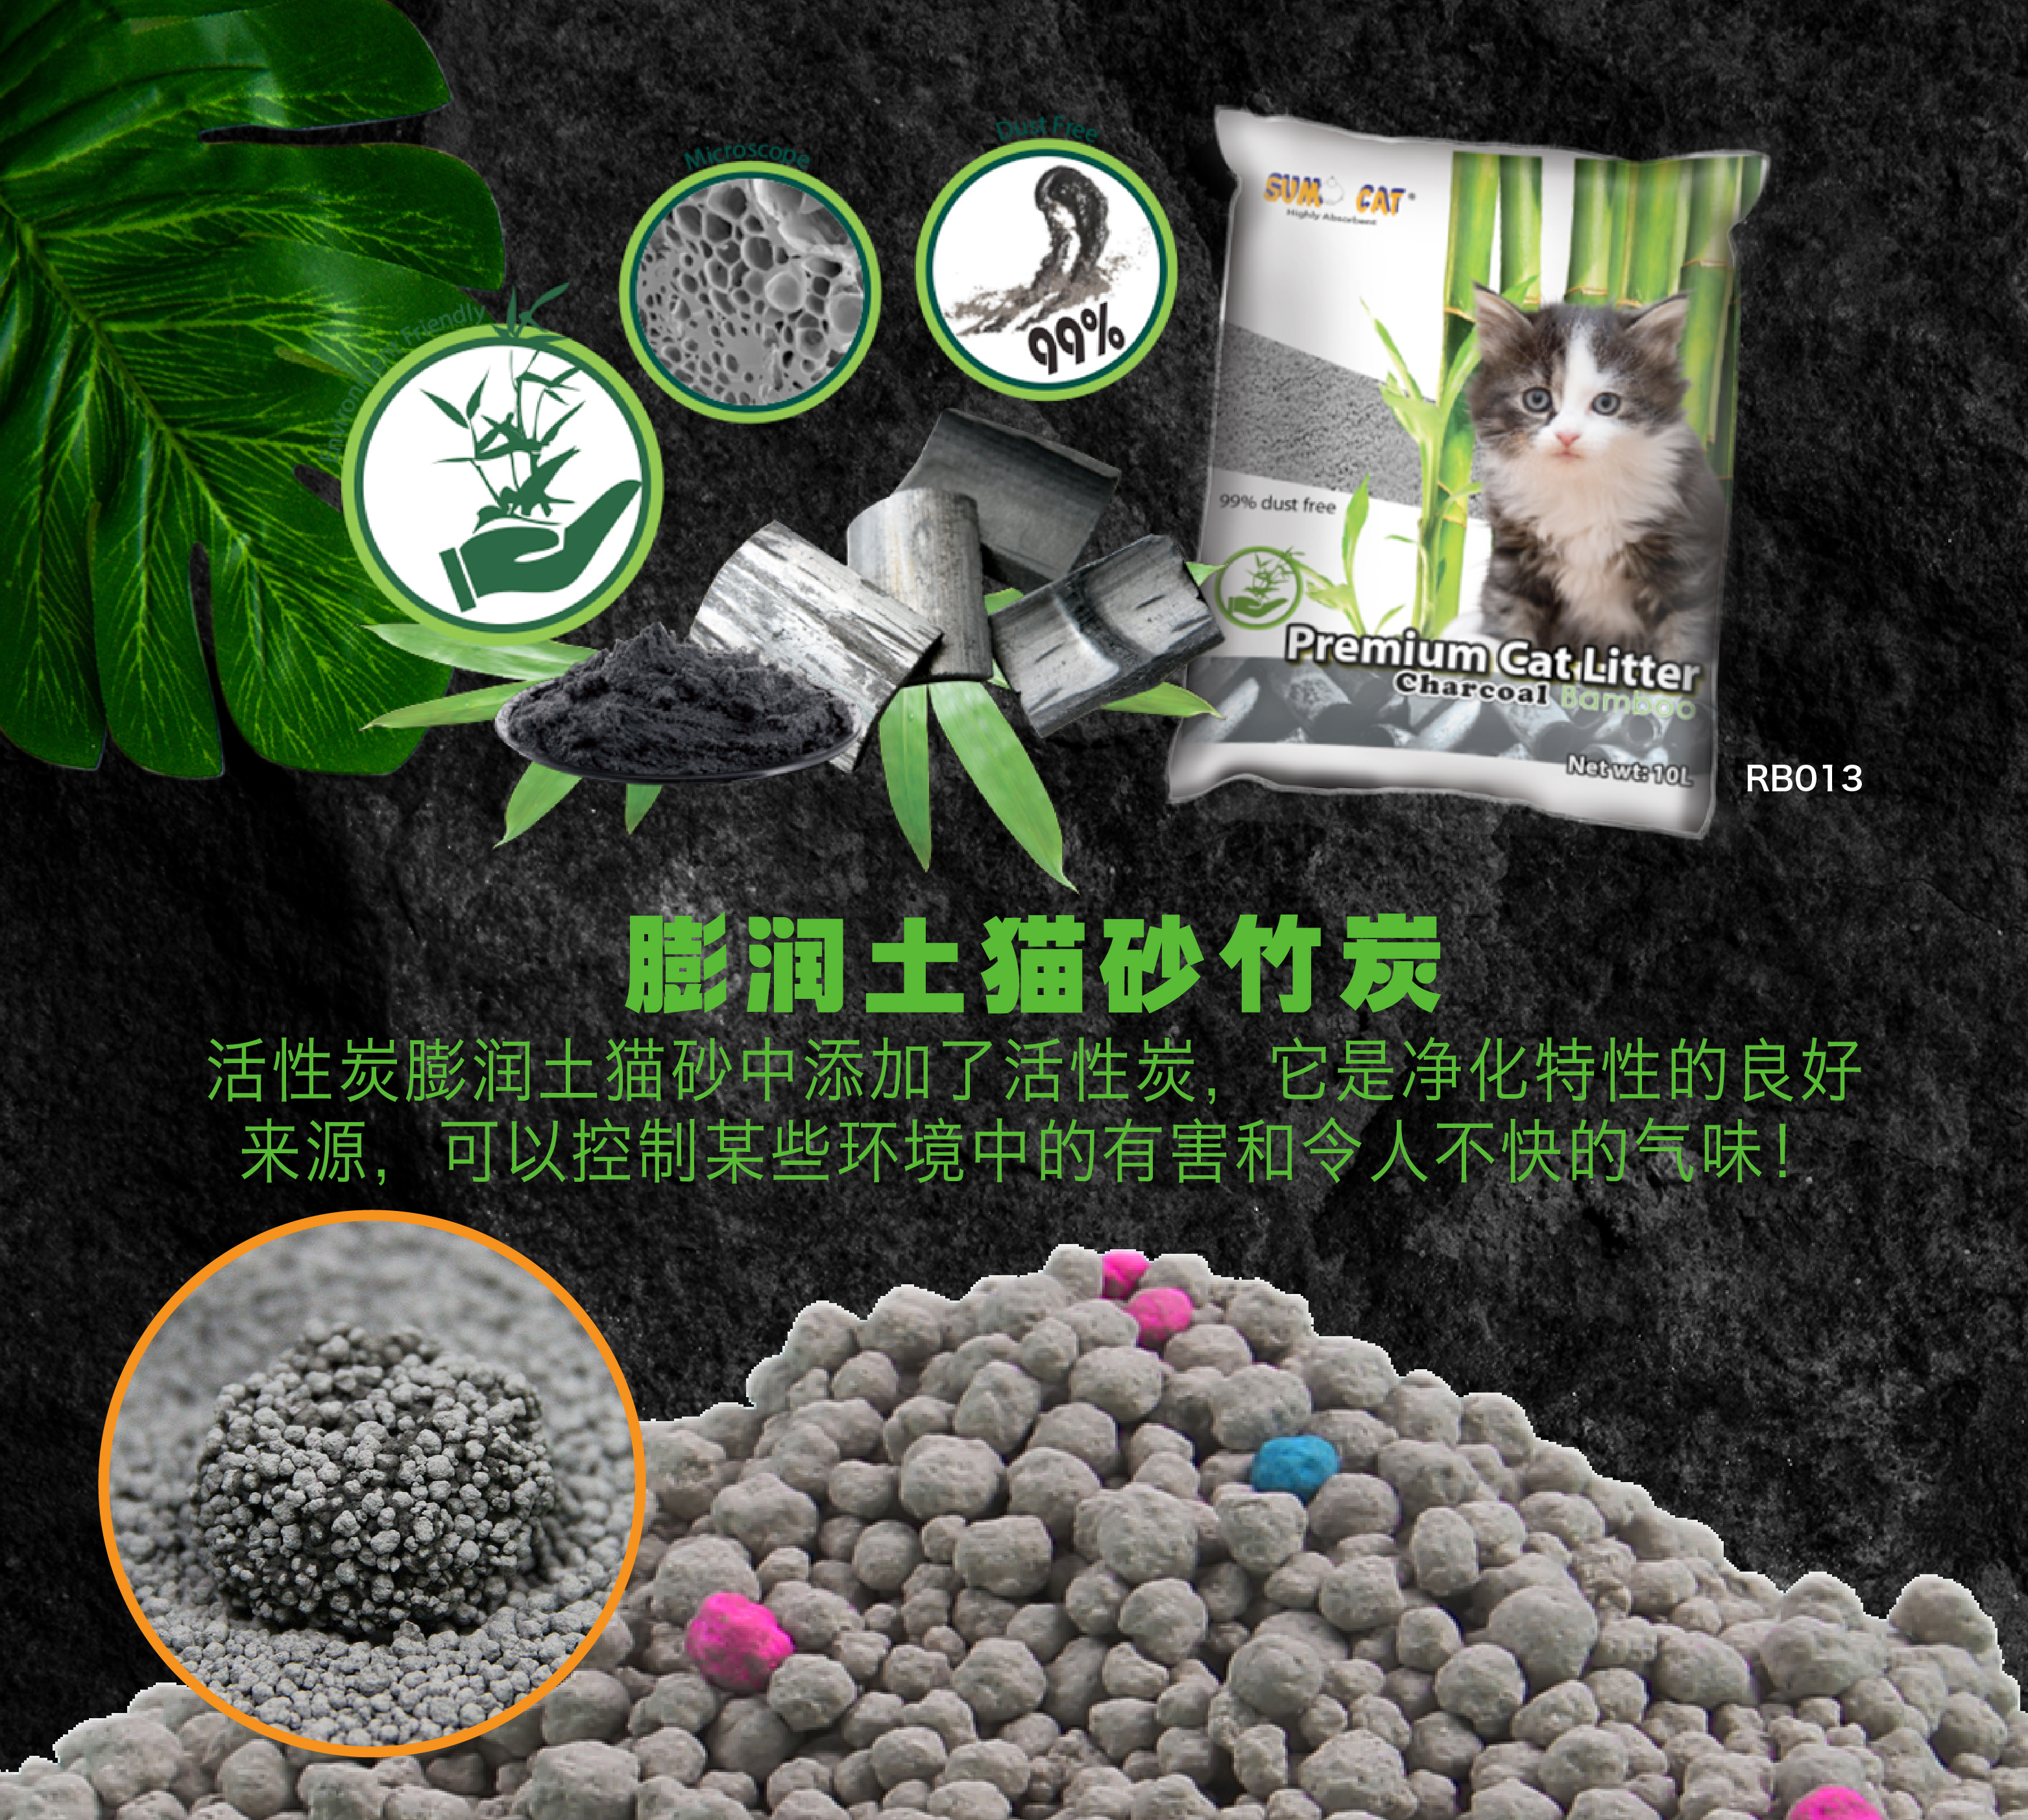 SC Cat Litter Web Post-Chi-03.jpg